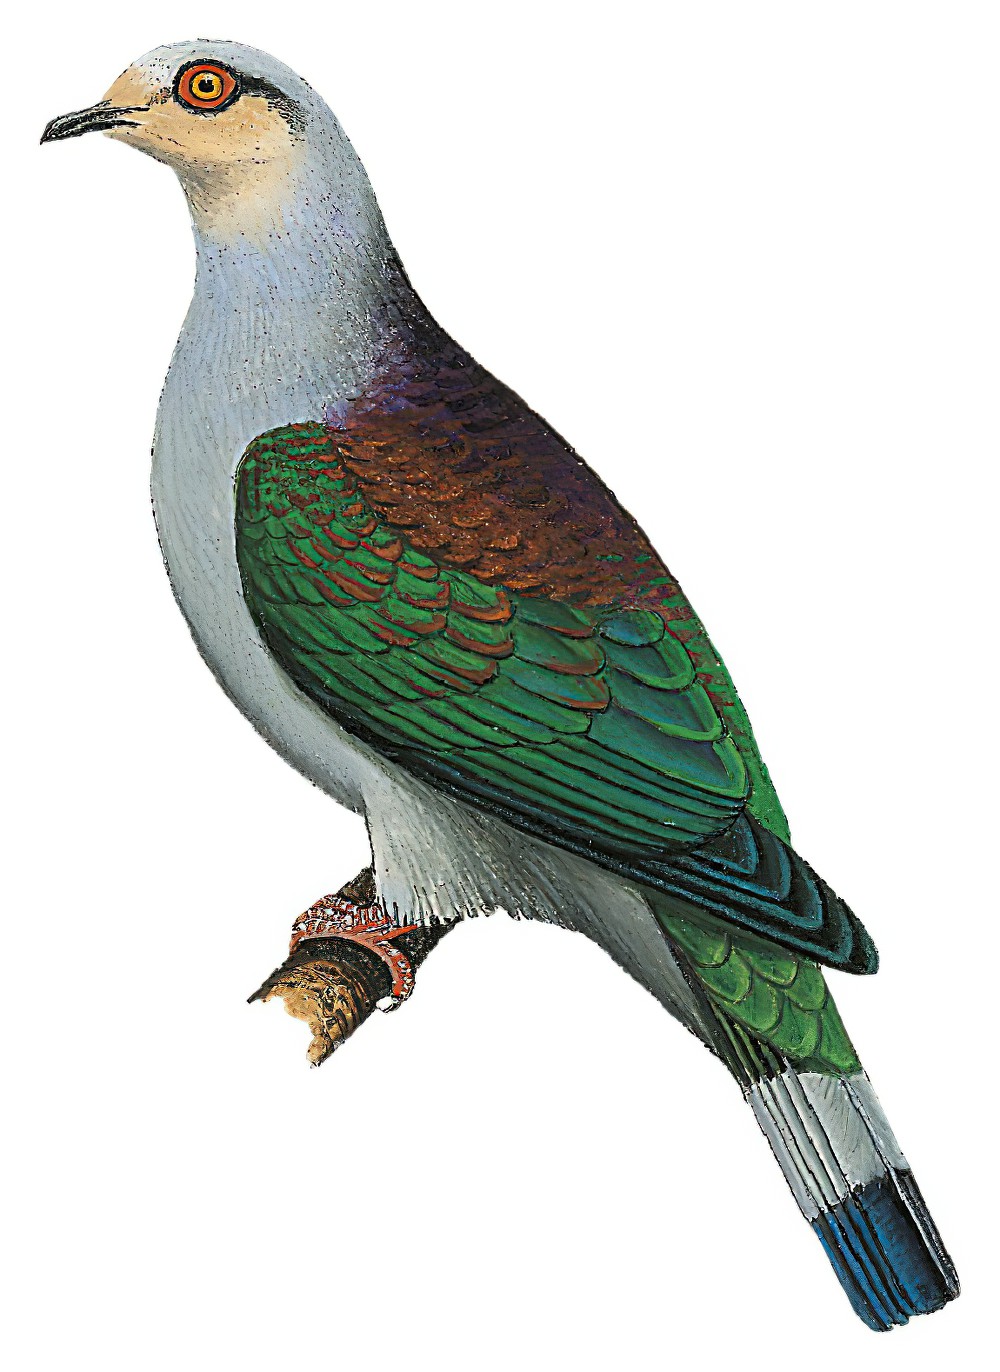 Mindoro Imperial-Pigeon / Ducula mindorensis